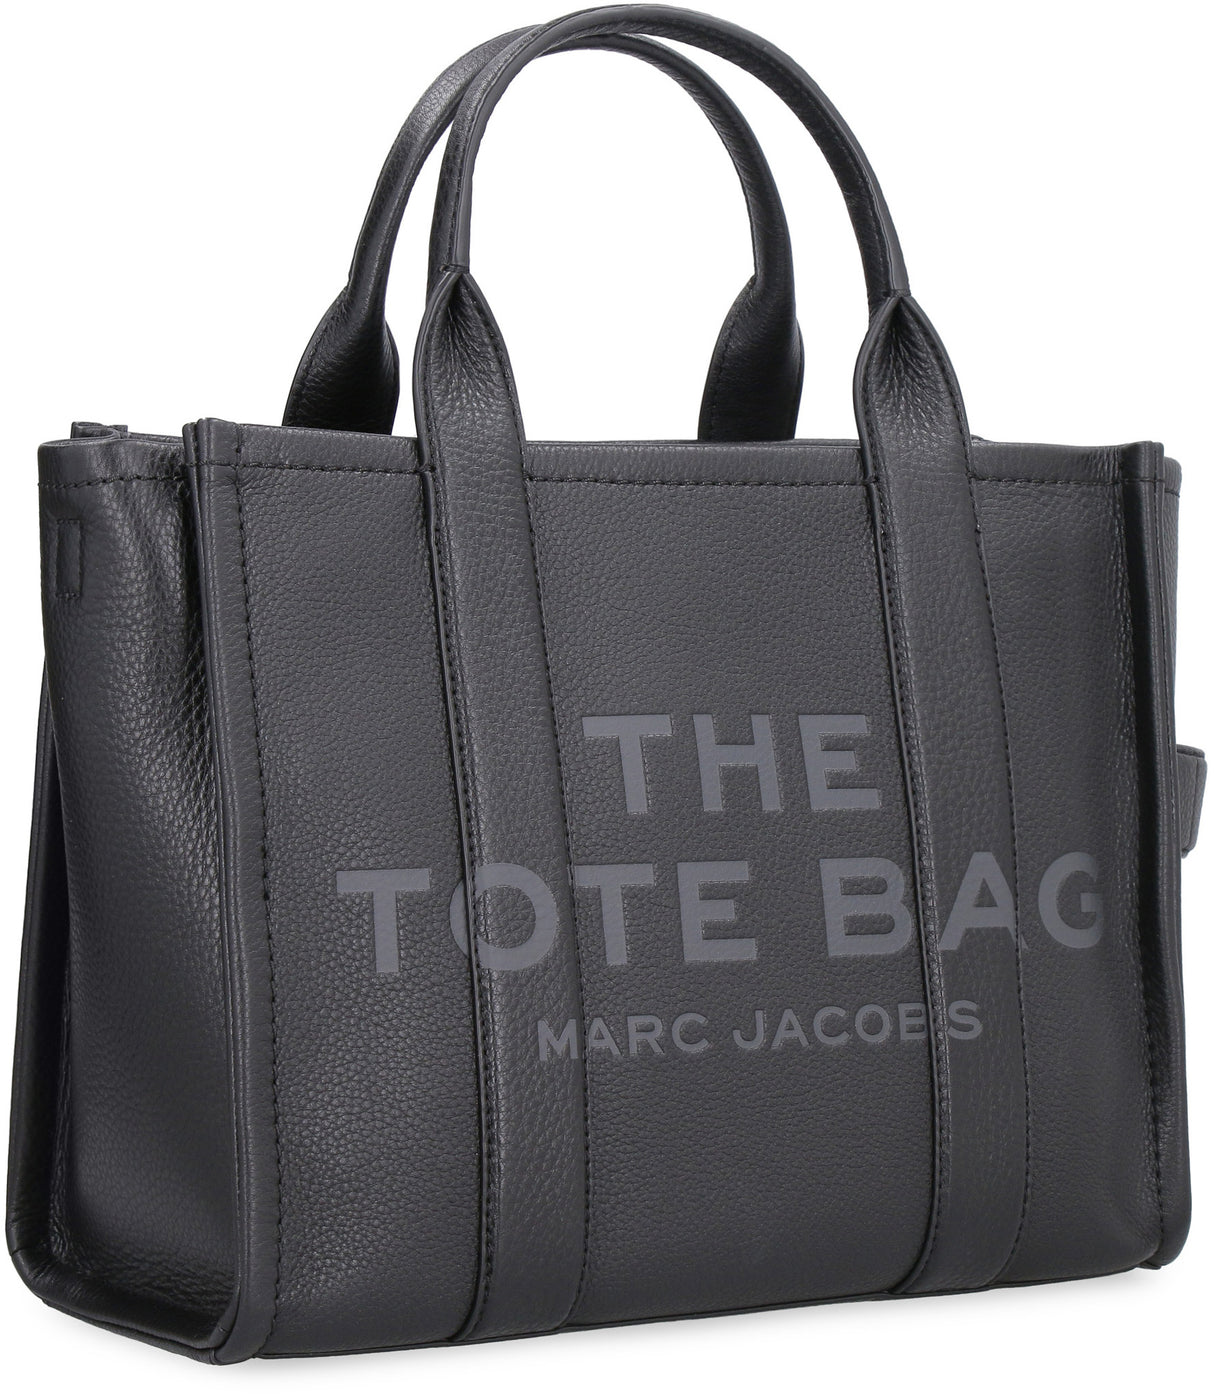 MARC JACOBS Mini Black Leather Tote Handbag - Unisex, Iconic Style for All Seasons